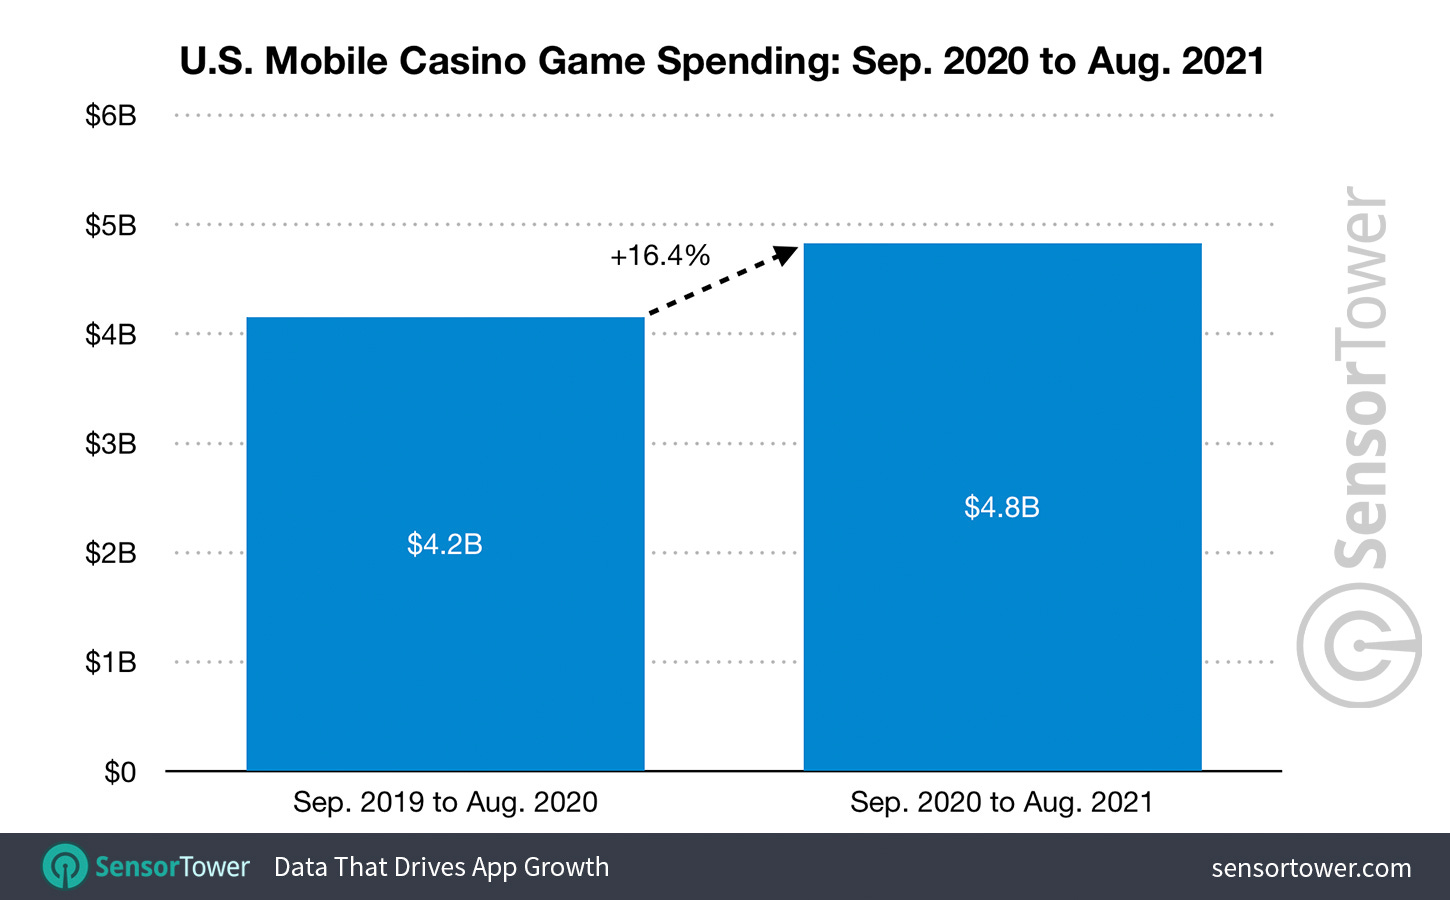 U.S. Mobile Casino Game Spending Revenue: September 1, 2020 to August 31, 2021